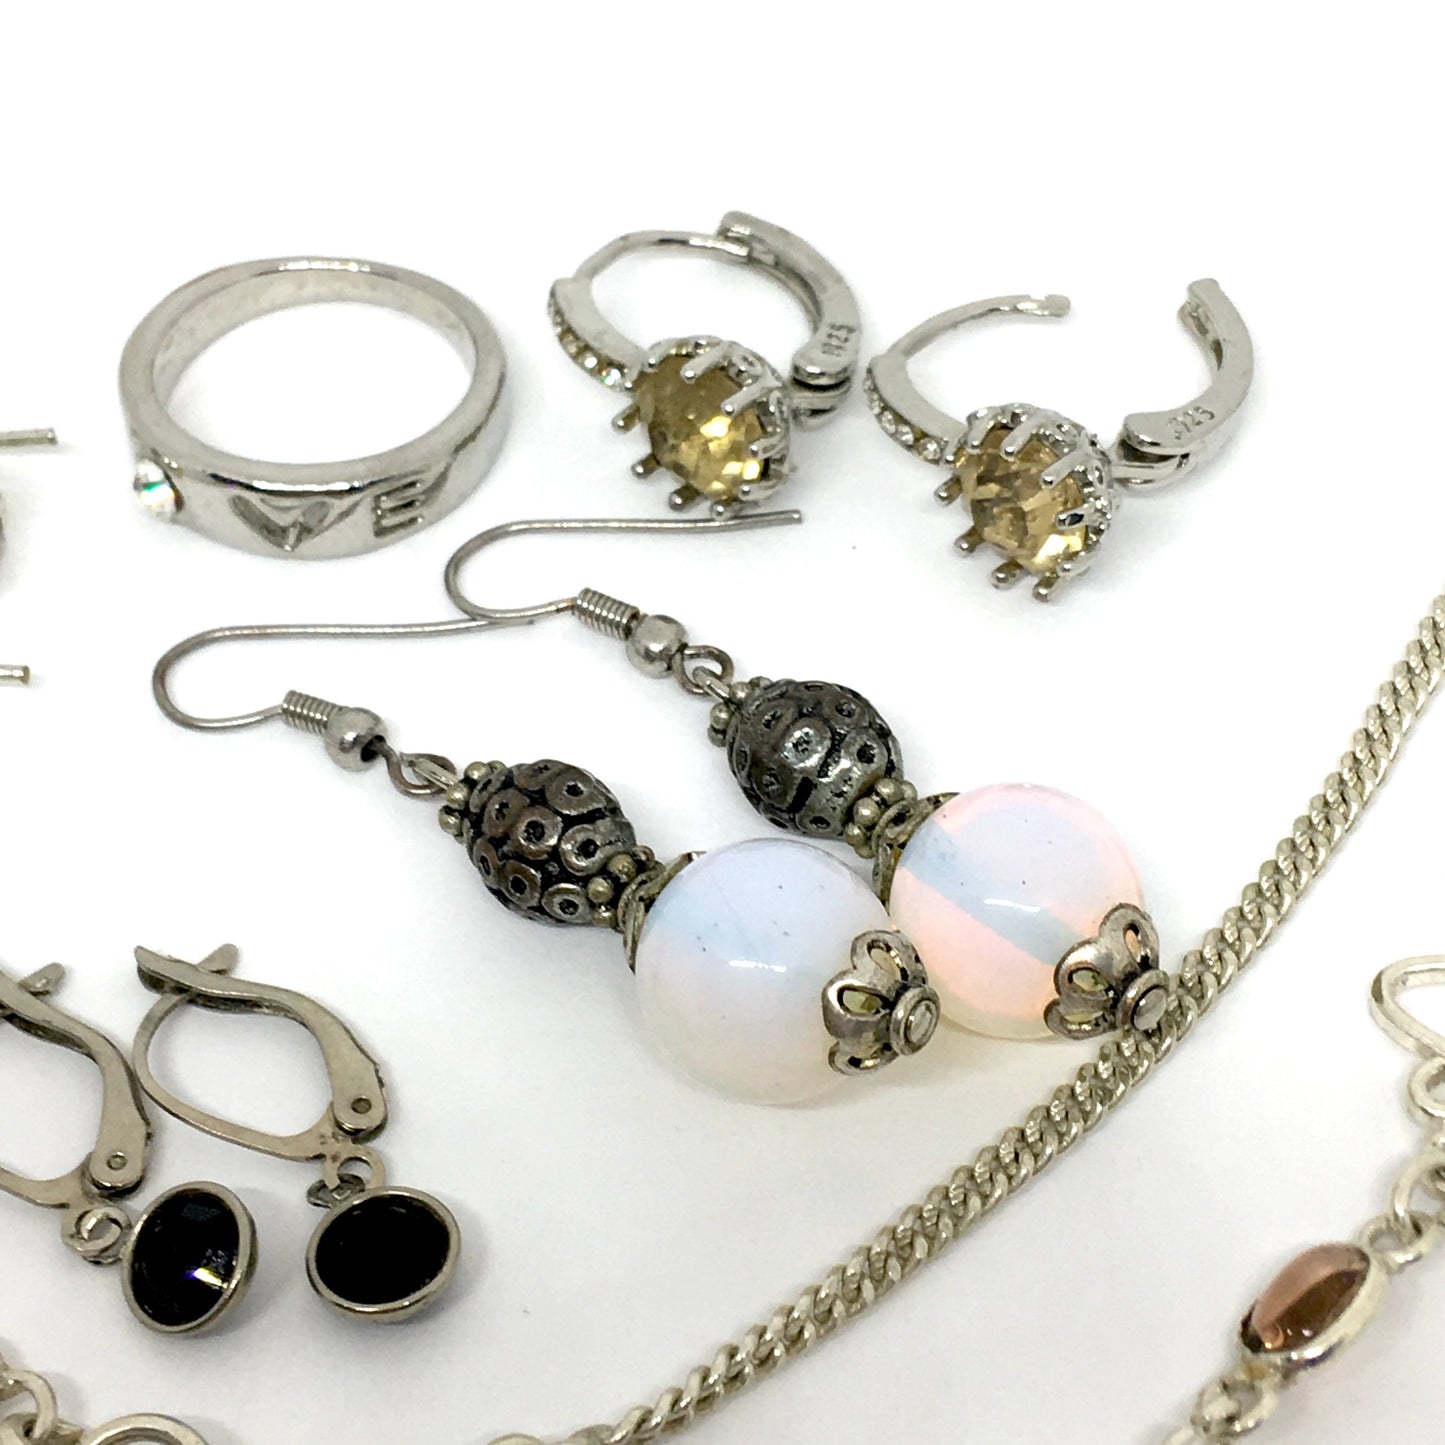 Costume Jewelry Lot | Necklace Bracelet Earrings & Ring Silver Tone w/ Stones